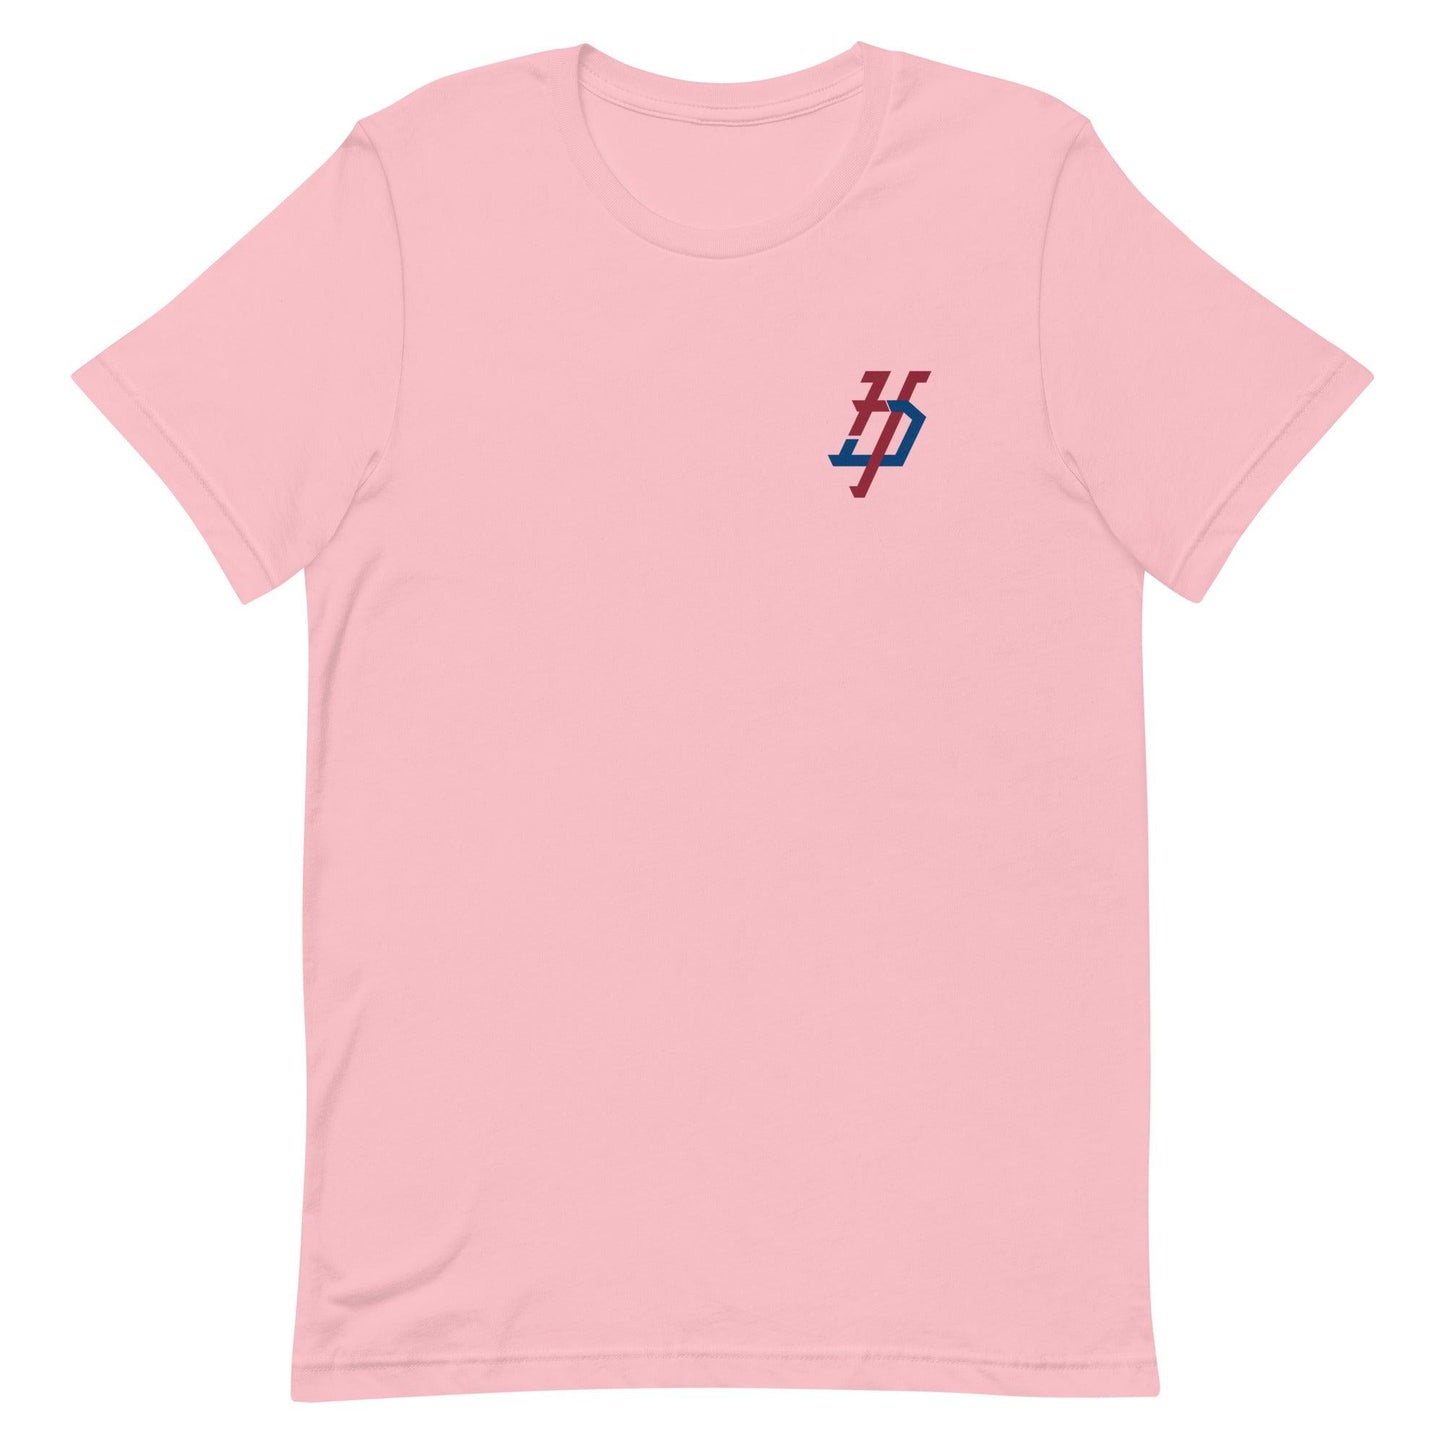 Hasise DuBois "Essentials" t-shirt - Fan Arch